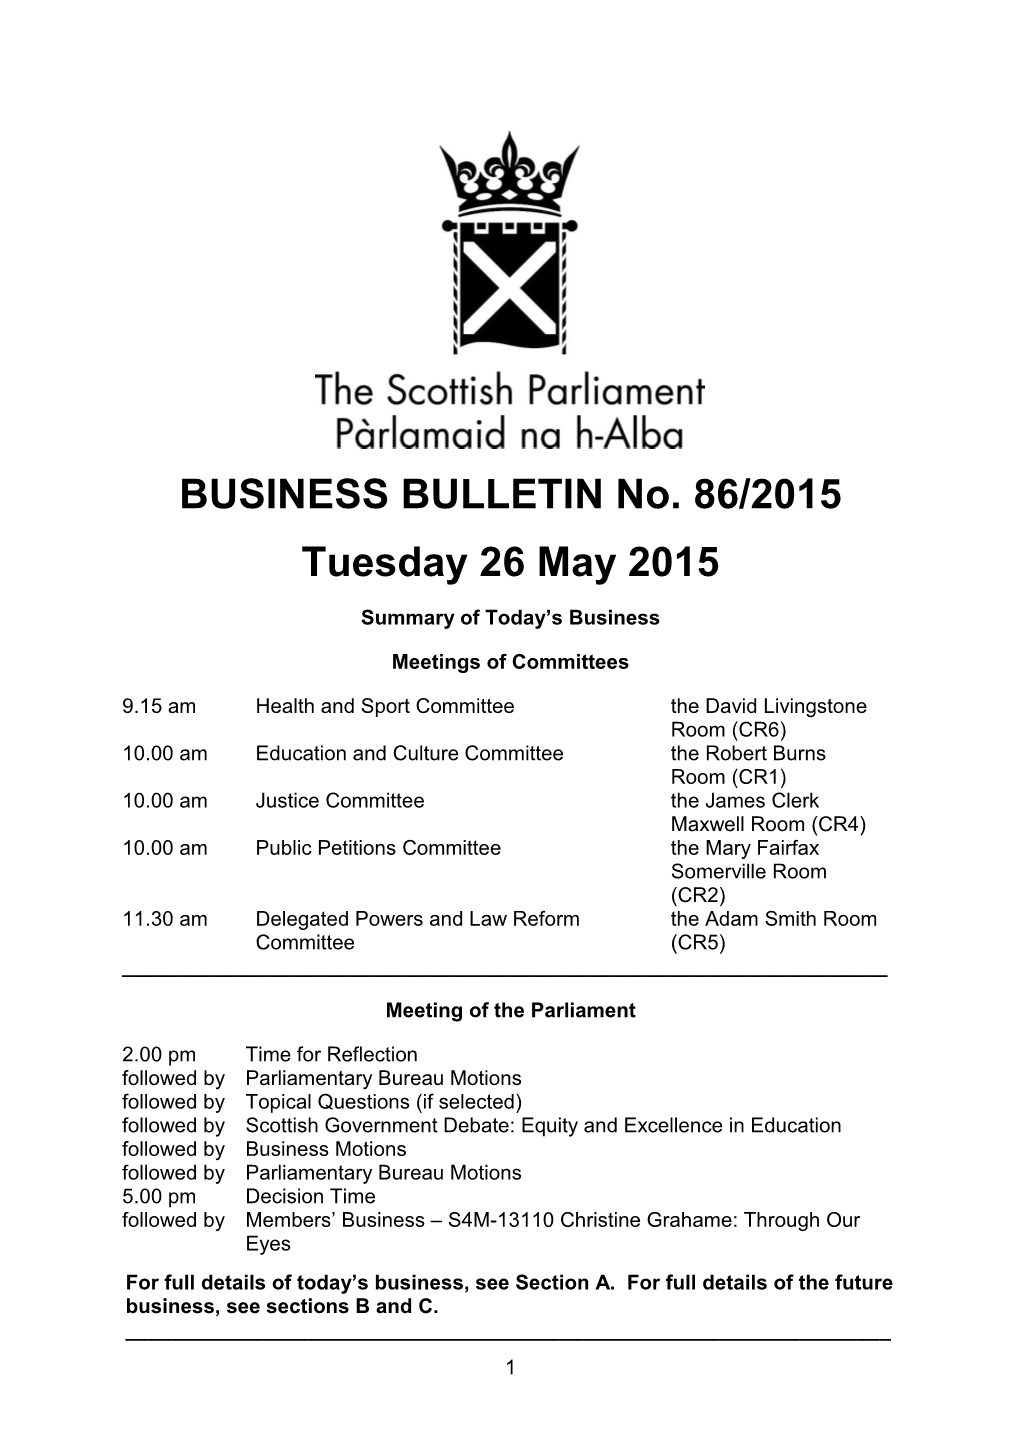 BUSINESS BULLETIN No. 86/2015 Tuesday 26 May 2015